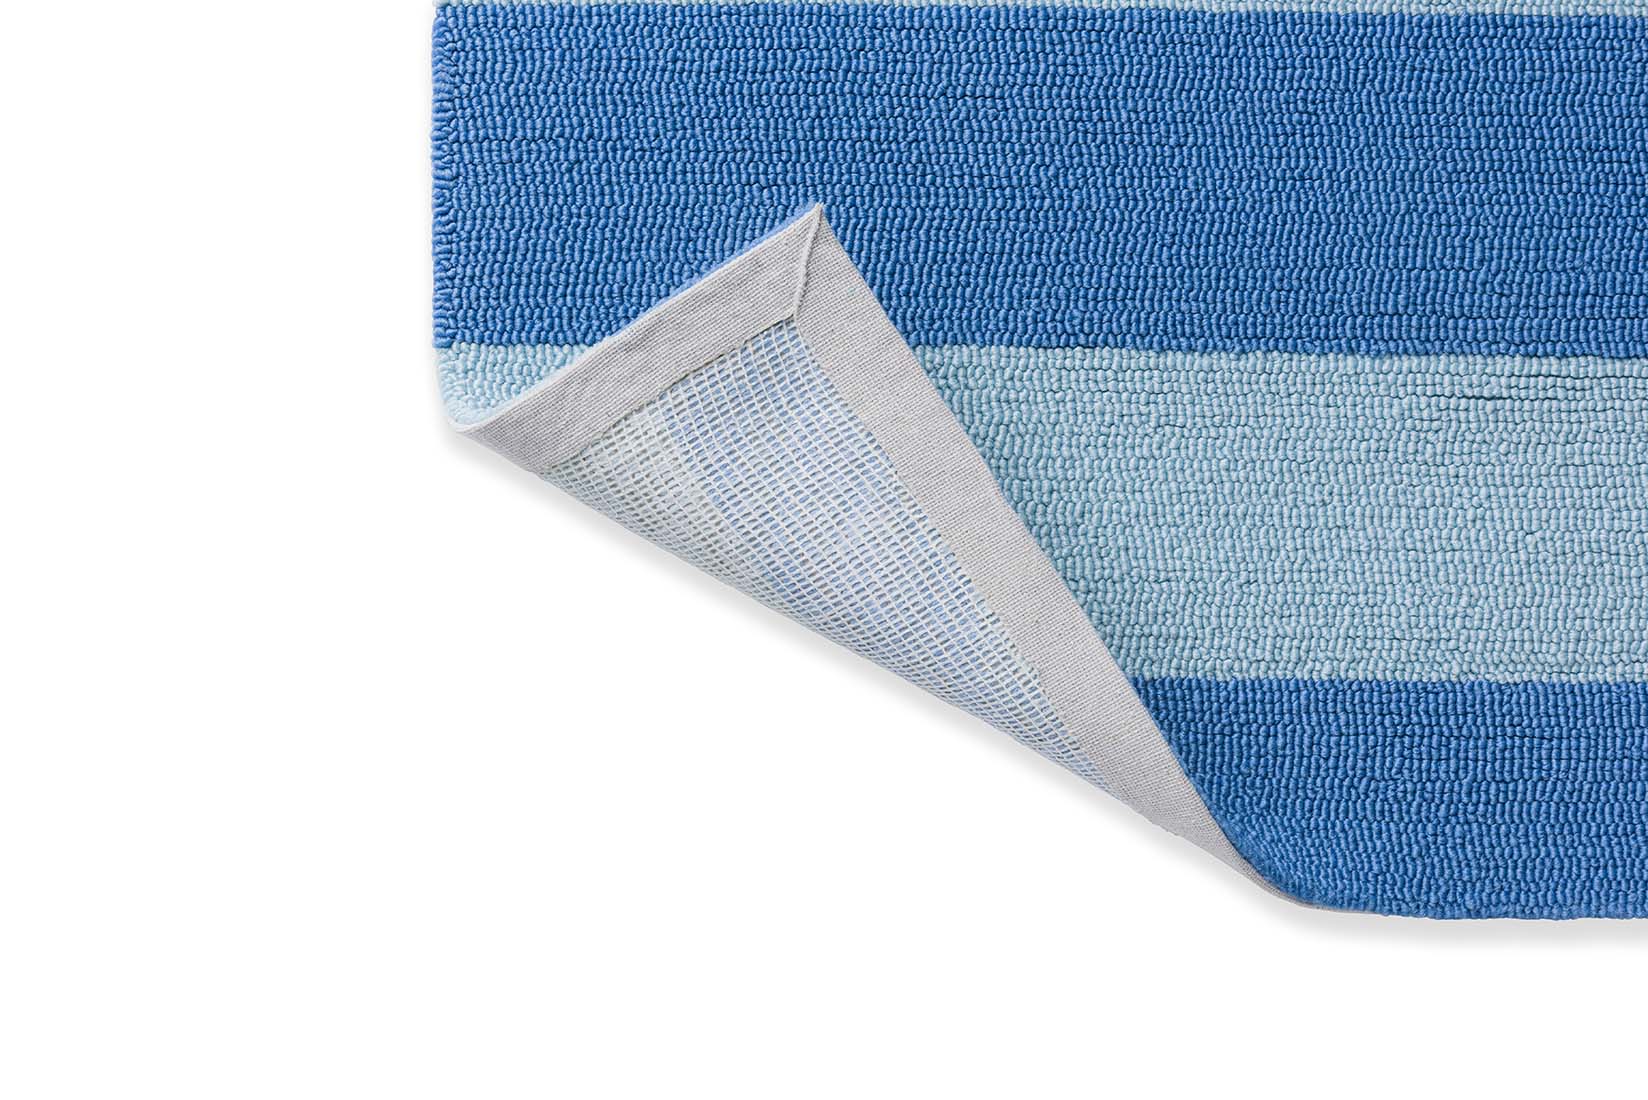 Blue stripe indoor/outdoor polypropylene rug
